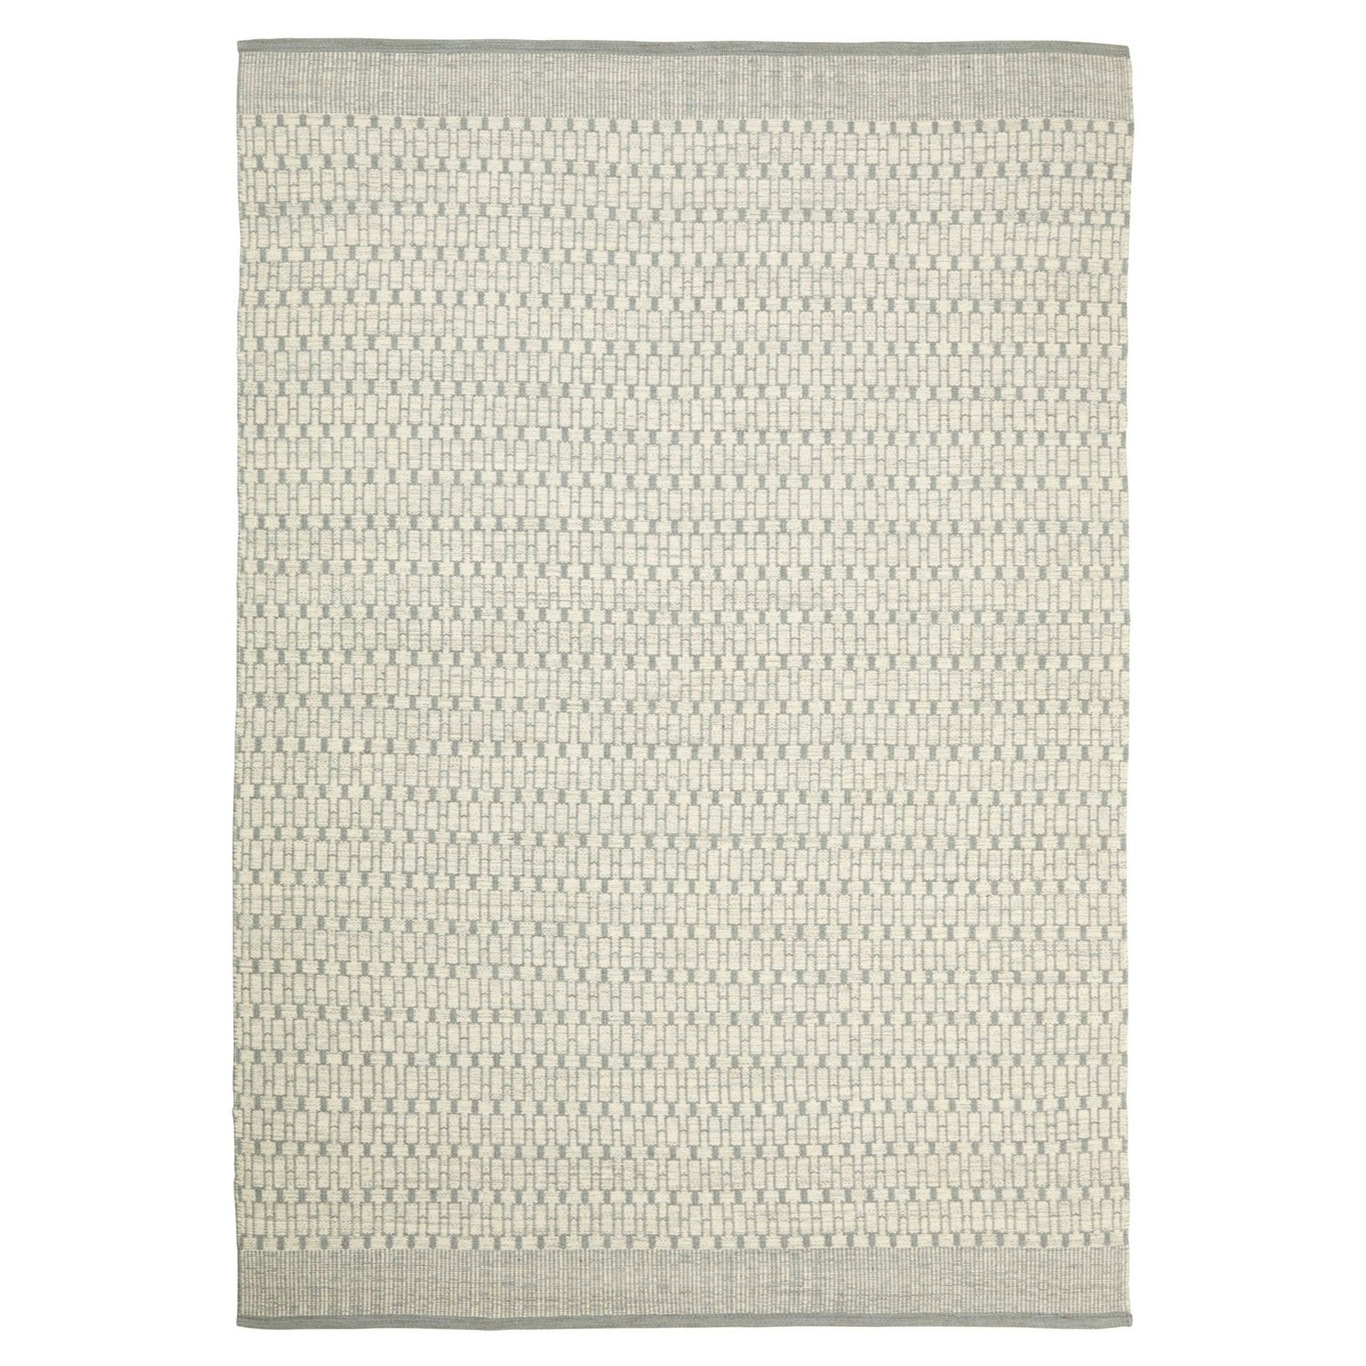 Dhurry Wool Mahi Rug 200x300 cm, Off White/Light Grey